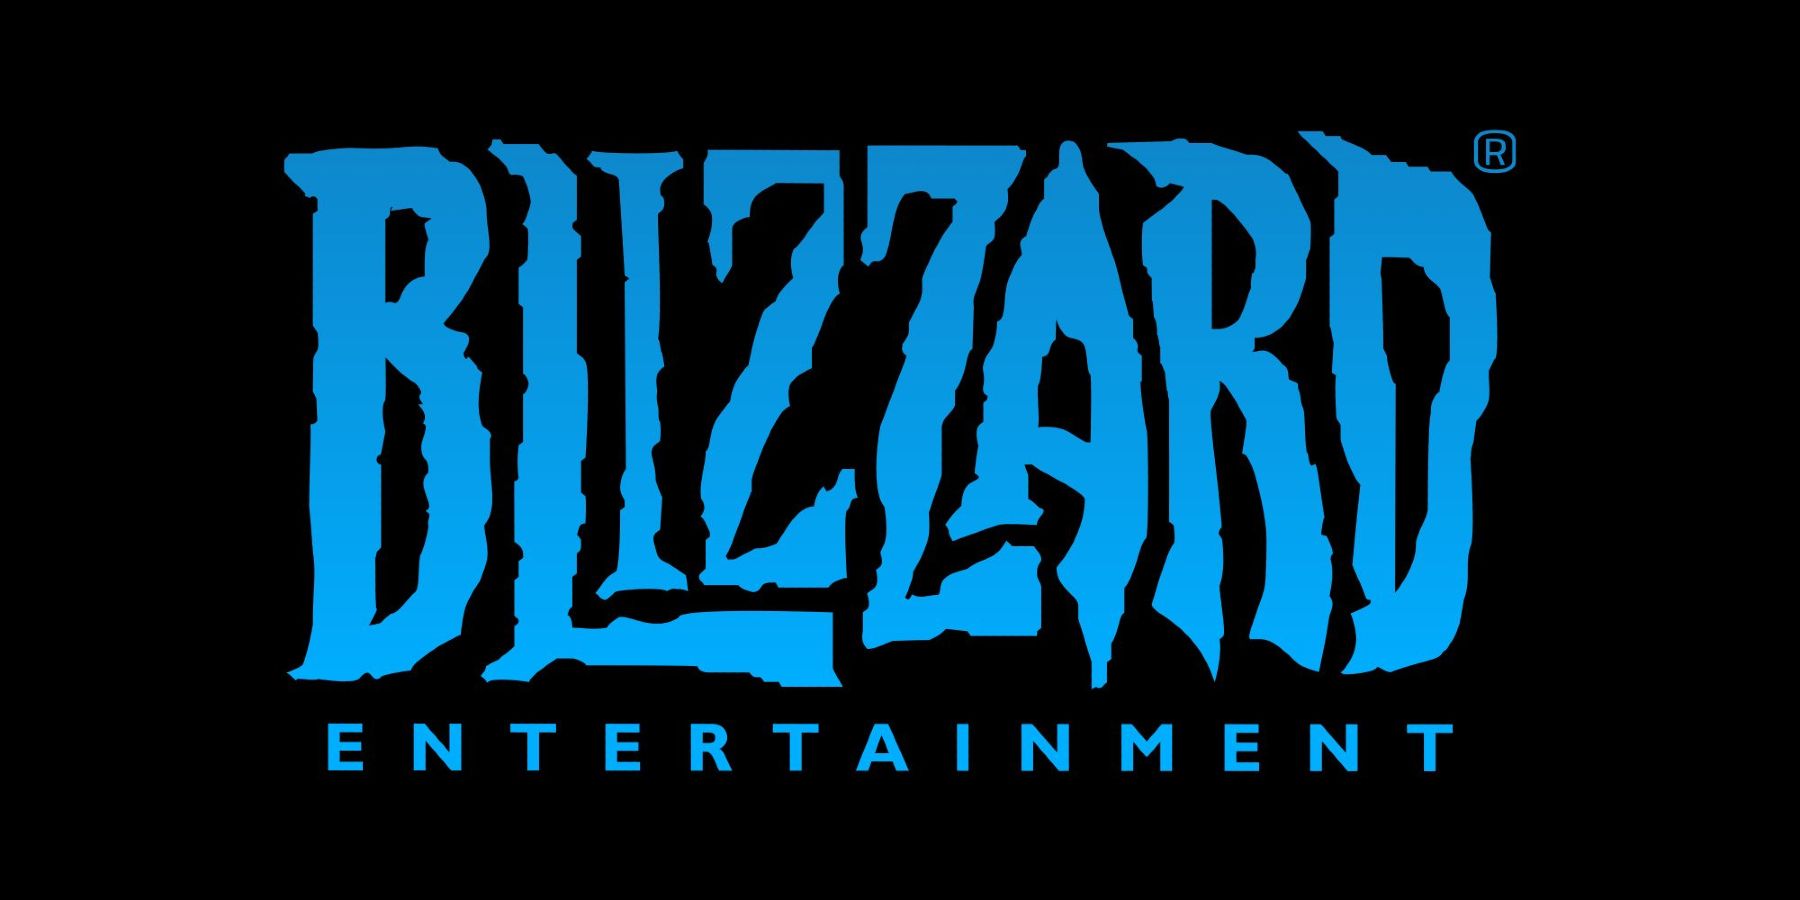 The logo for the development studio Blizzard Entertainment.